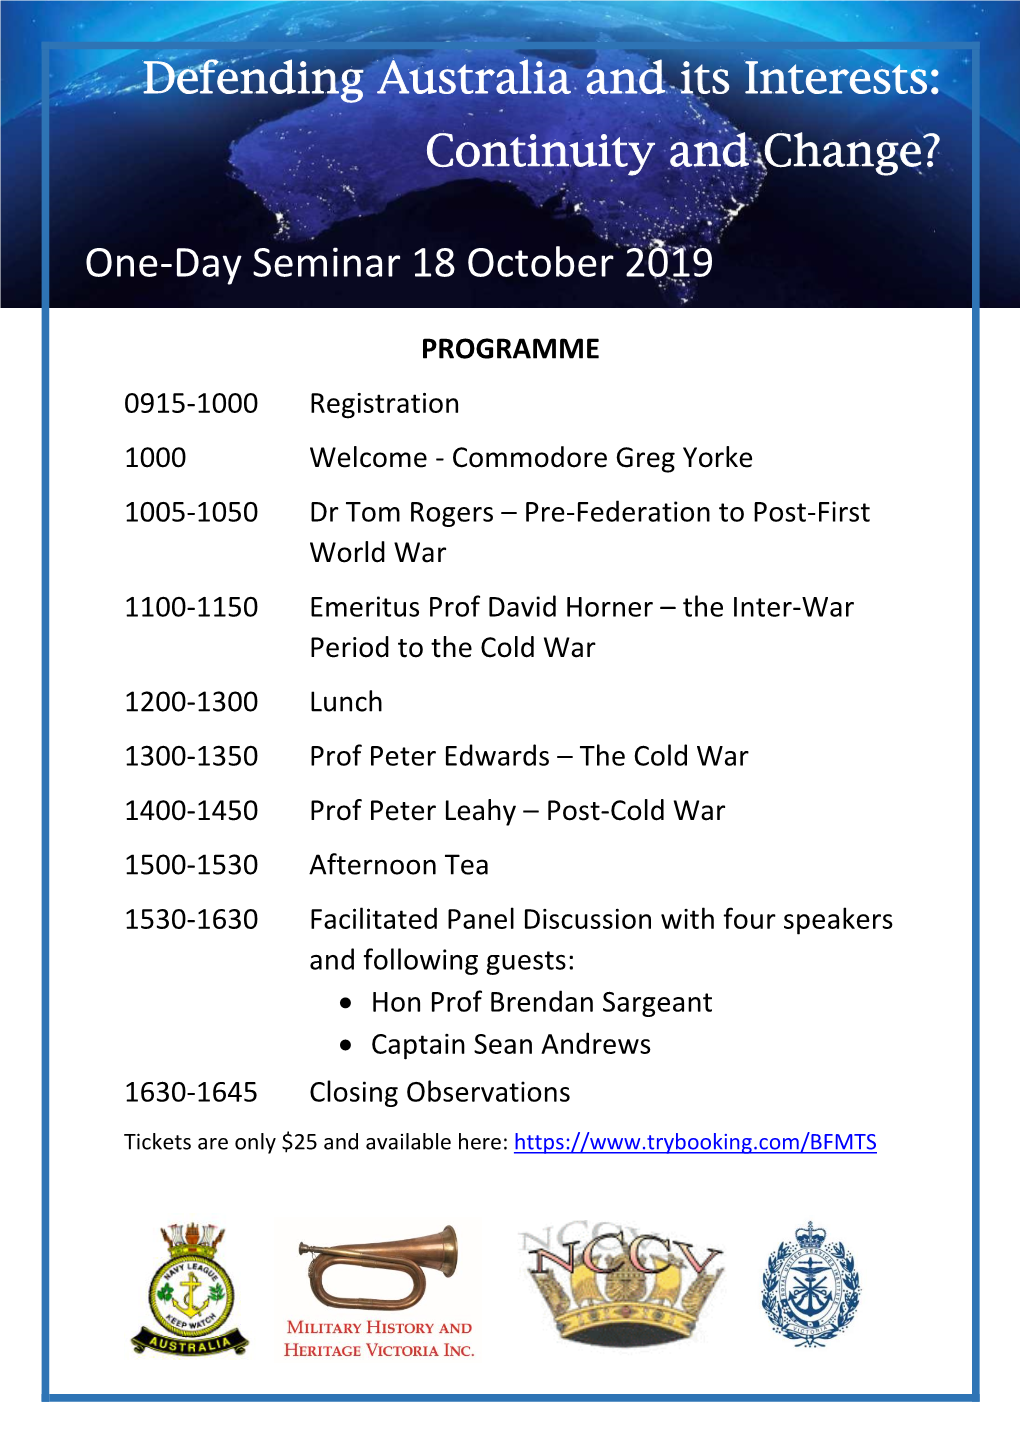 One-Day Seminar 18 October 2019